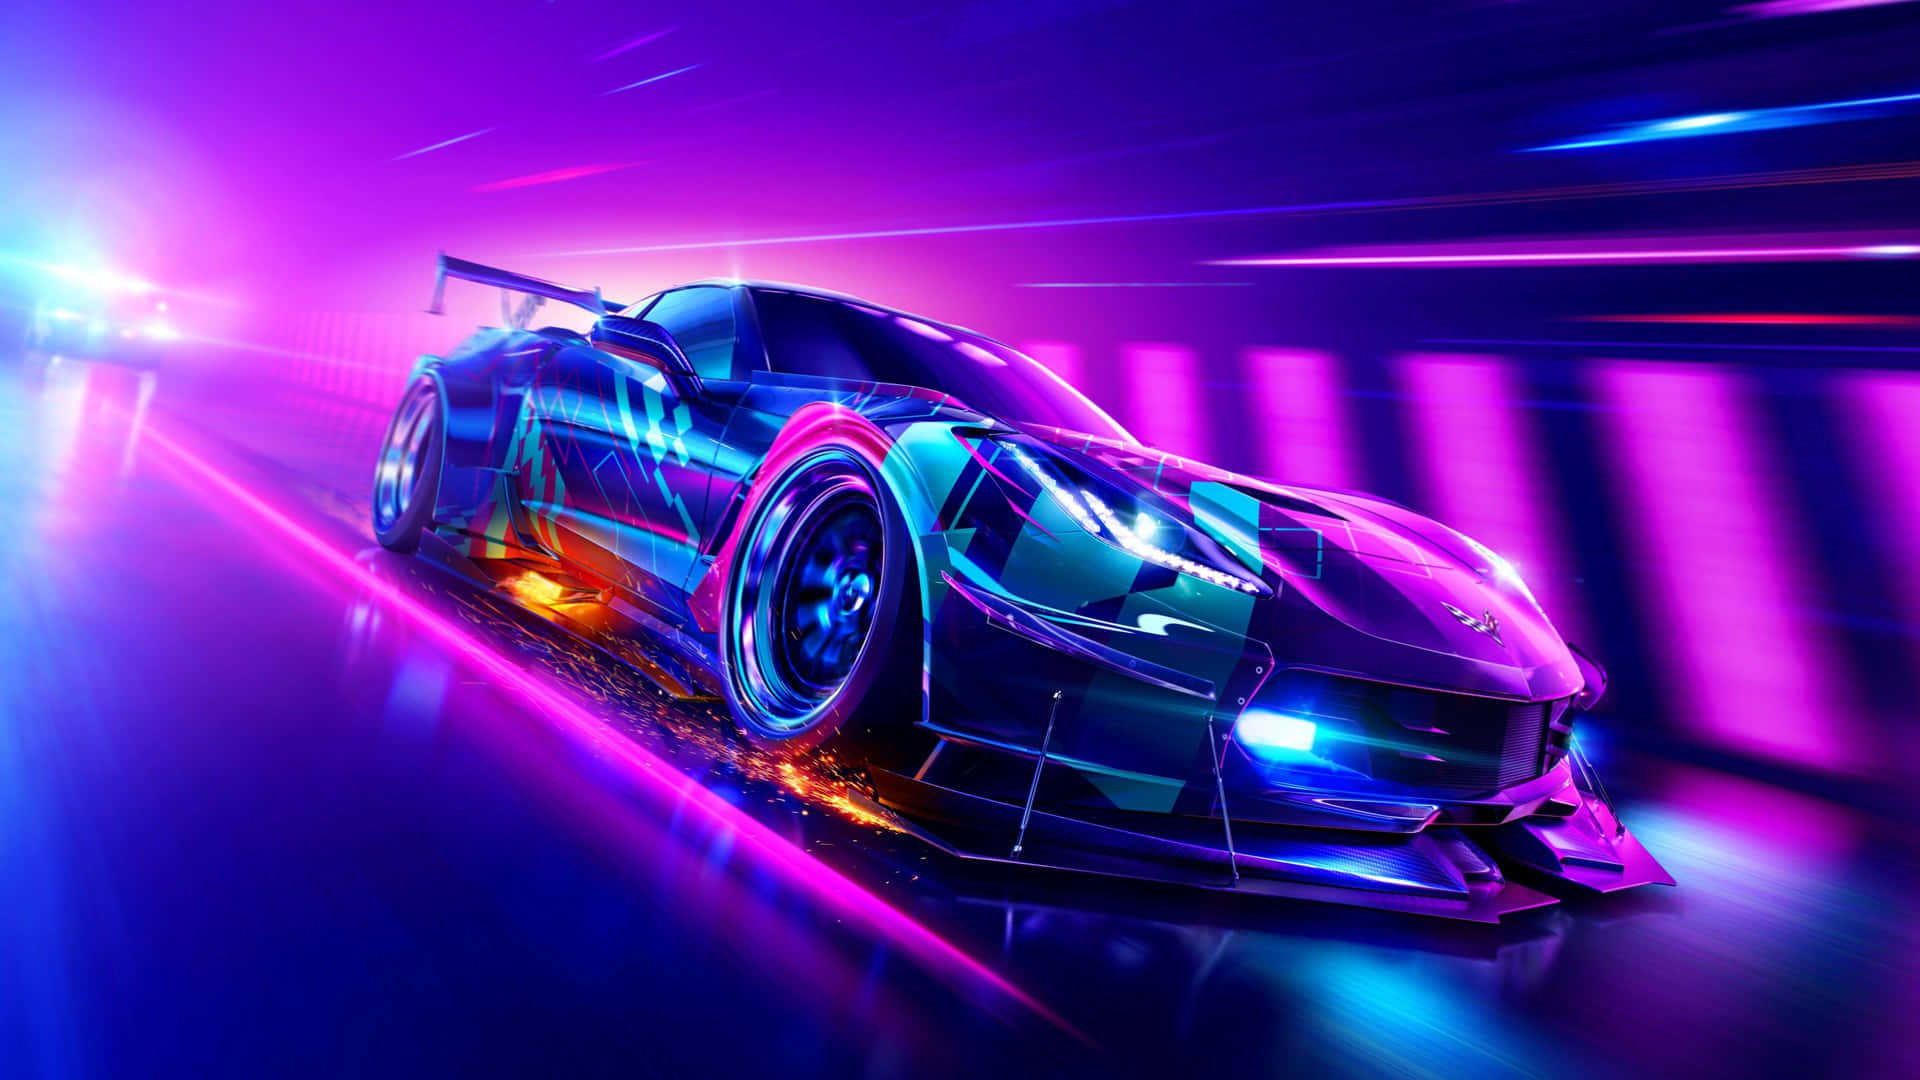 Cooleneon-auto Corvette Need For Speed Wallpaper